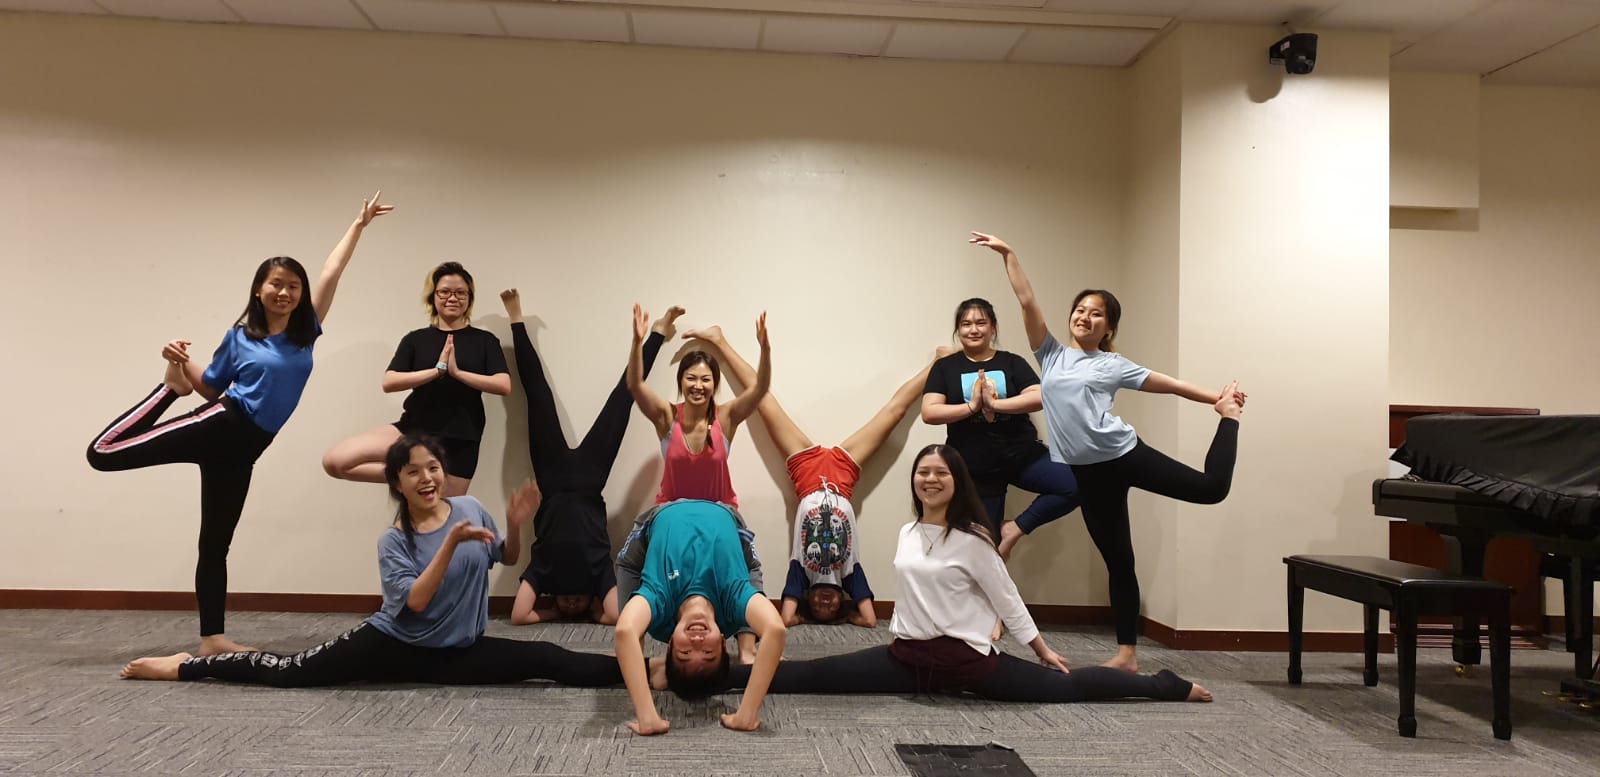 Team Bonding Yoga Class in Singapore